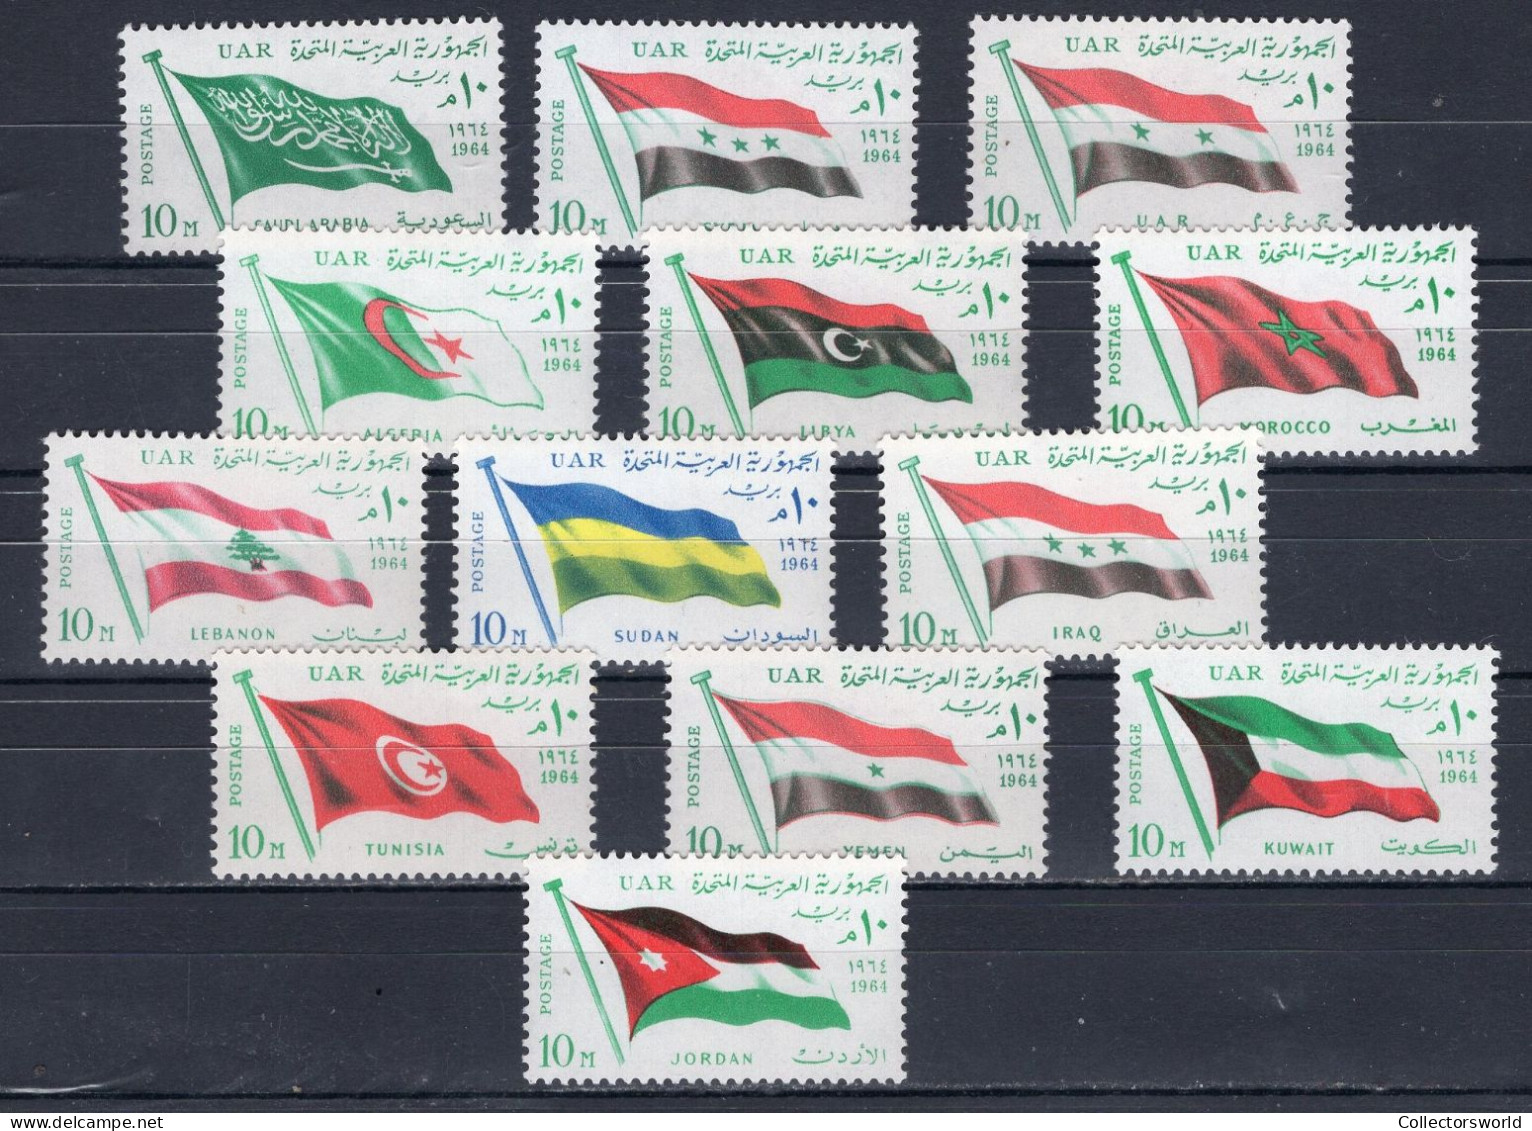 UAR United Arab Emirates Egypt 1964 Serie 13v Flags Arab League Summit MNH - Emiratos Árabes Unidos